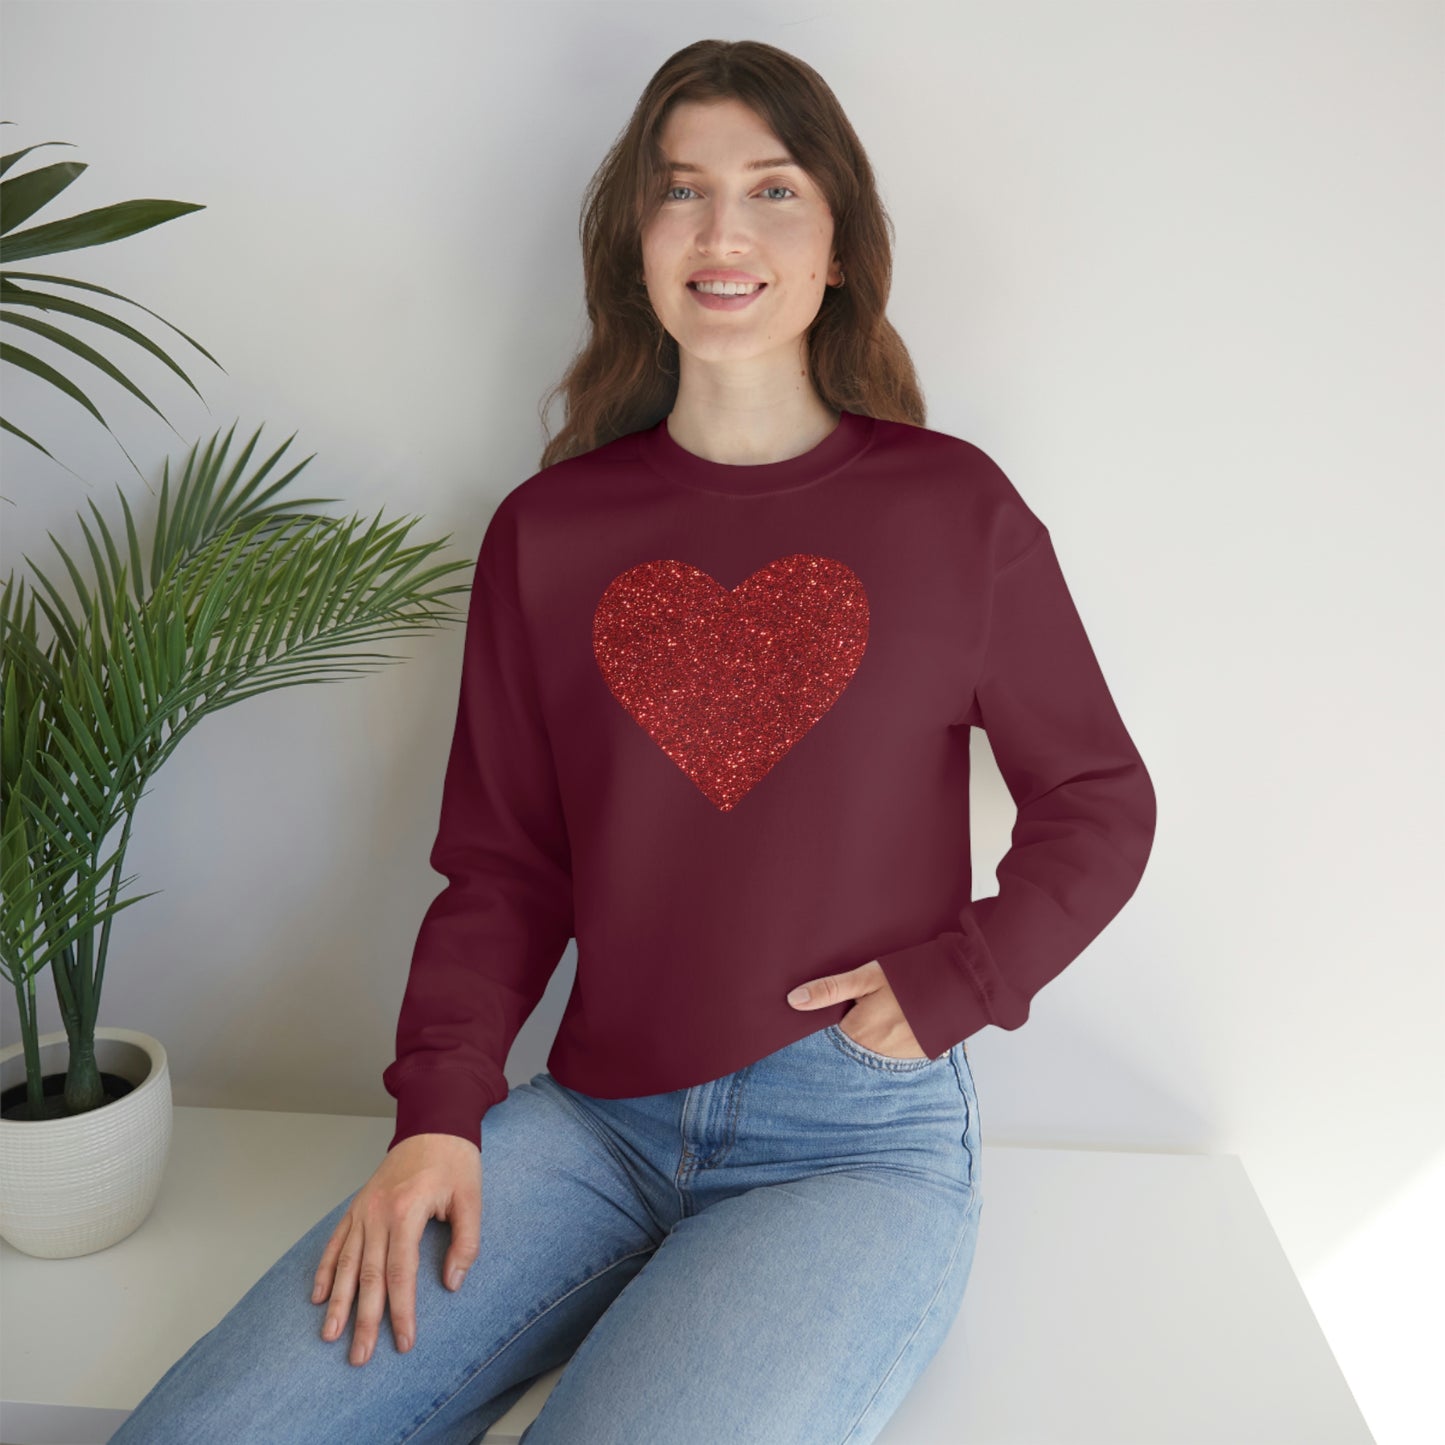 Heart Sweatshirt Love sweatshirt Love Shirt Cute Love Shirt with Heart Valentine sweatshirt - Matching Love shirt Girlfriend gift Boyfriend